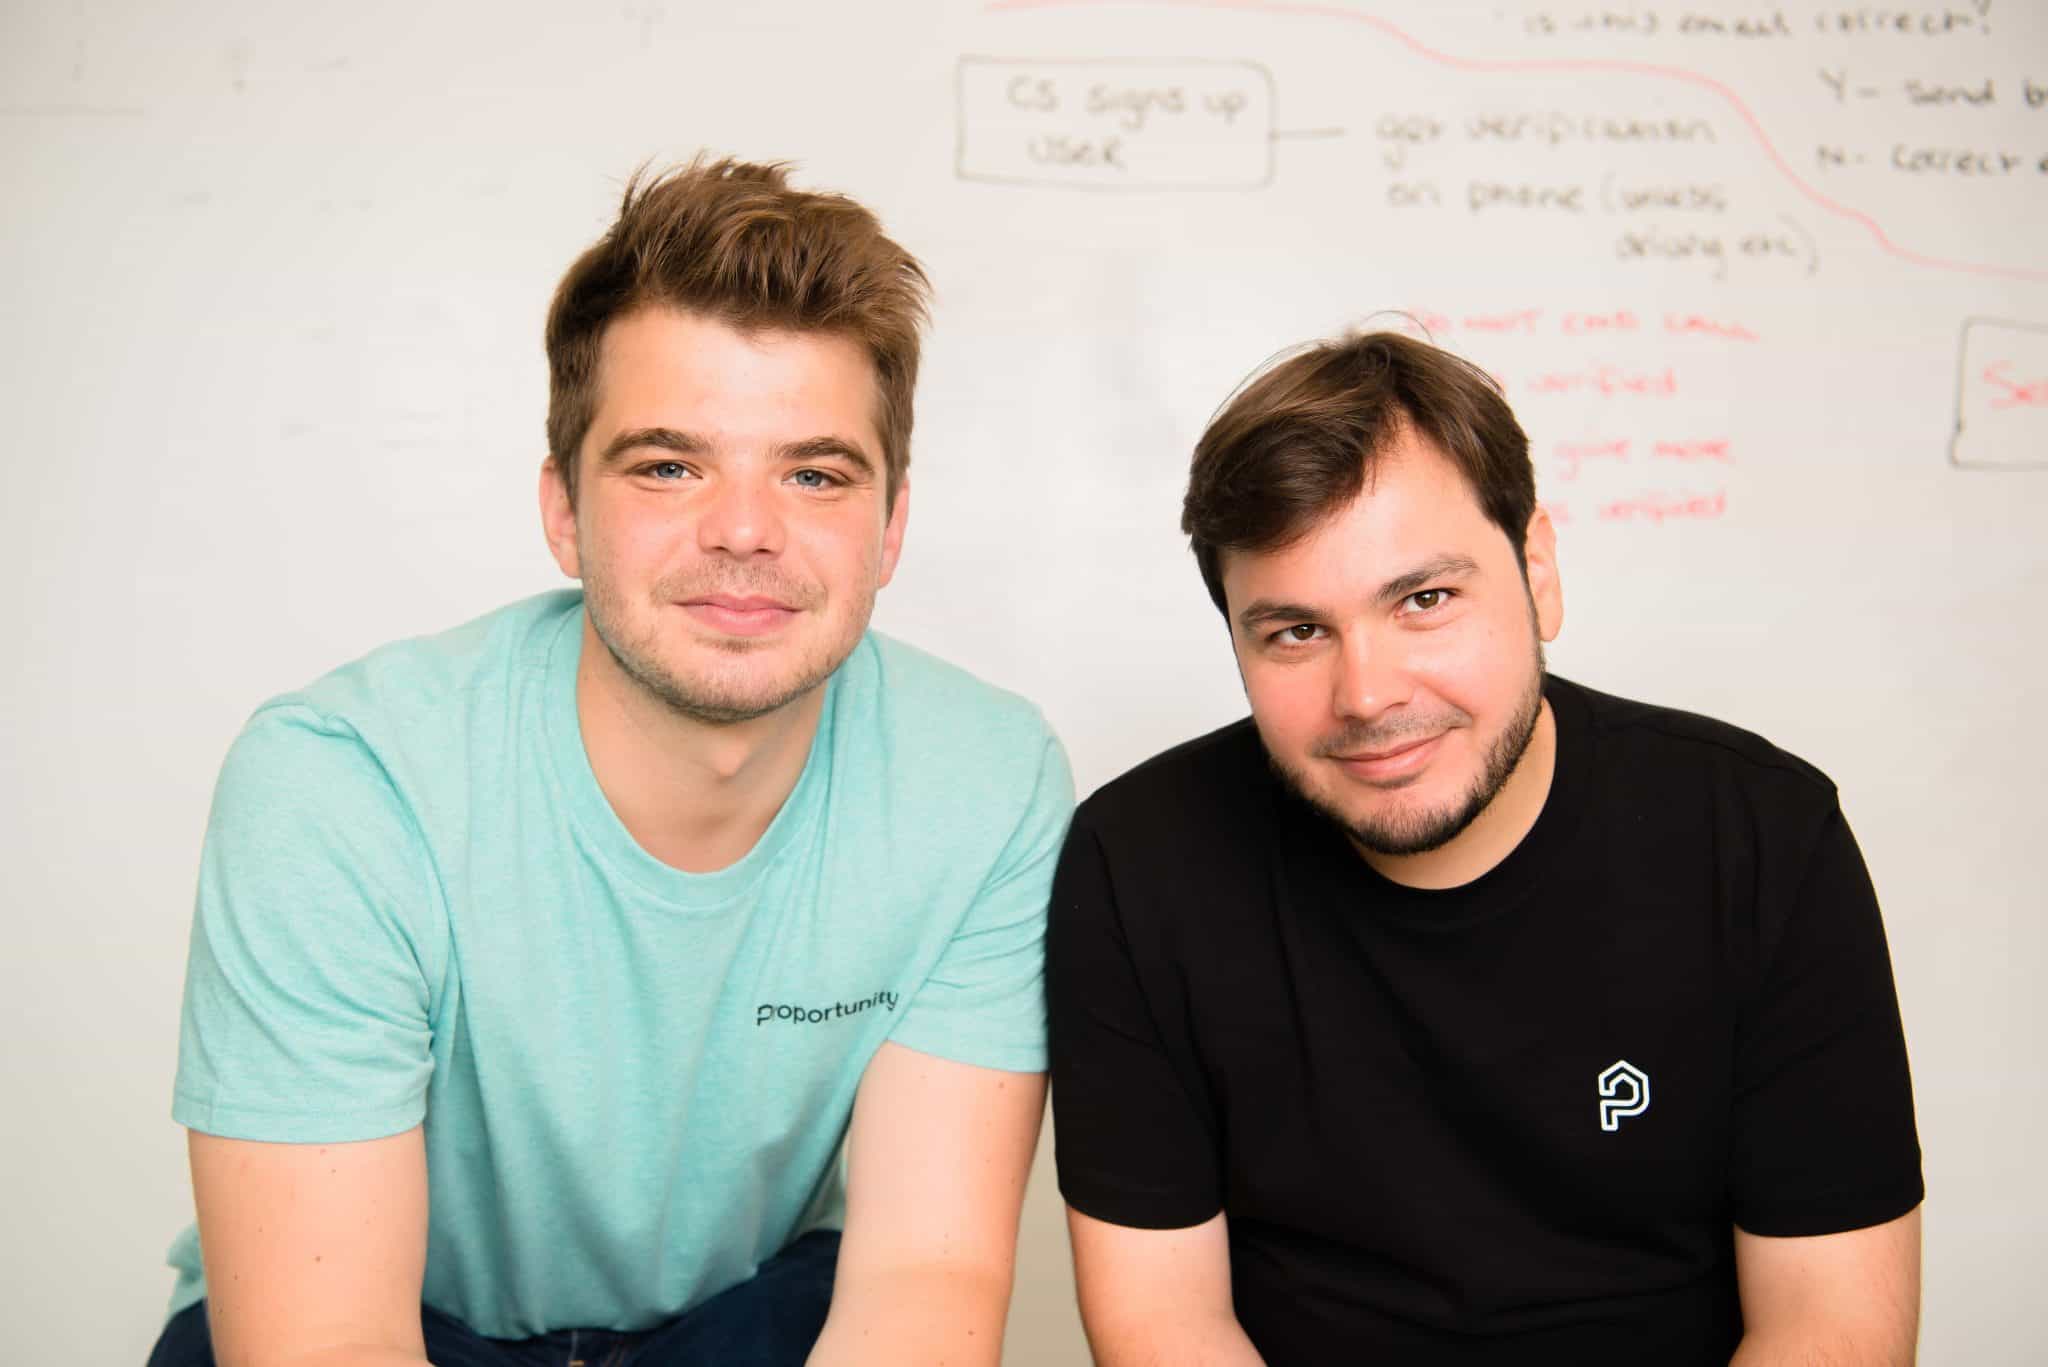 Proportunity founders Vadim Toader and Ștefan Boronea